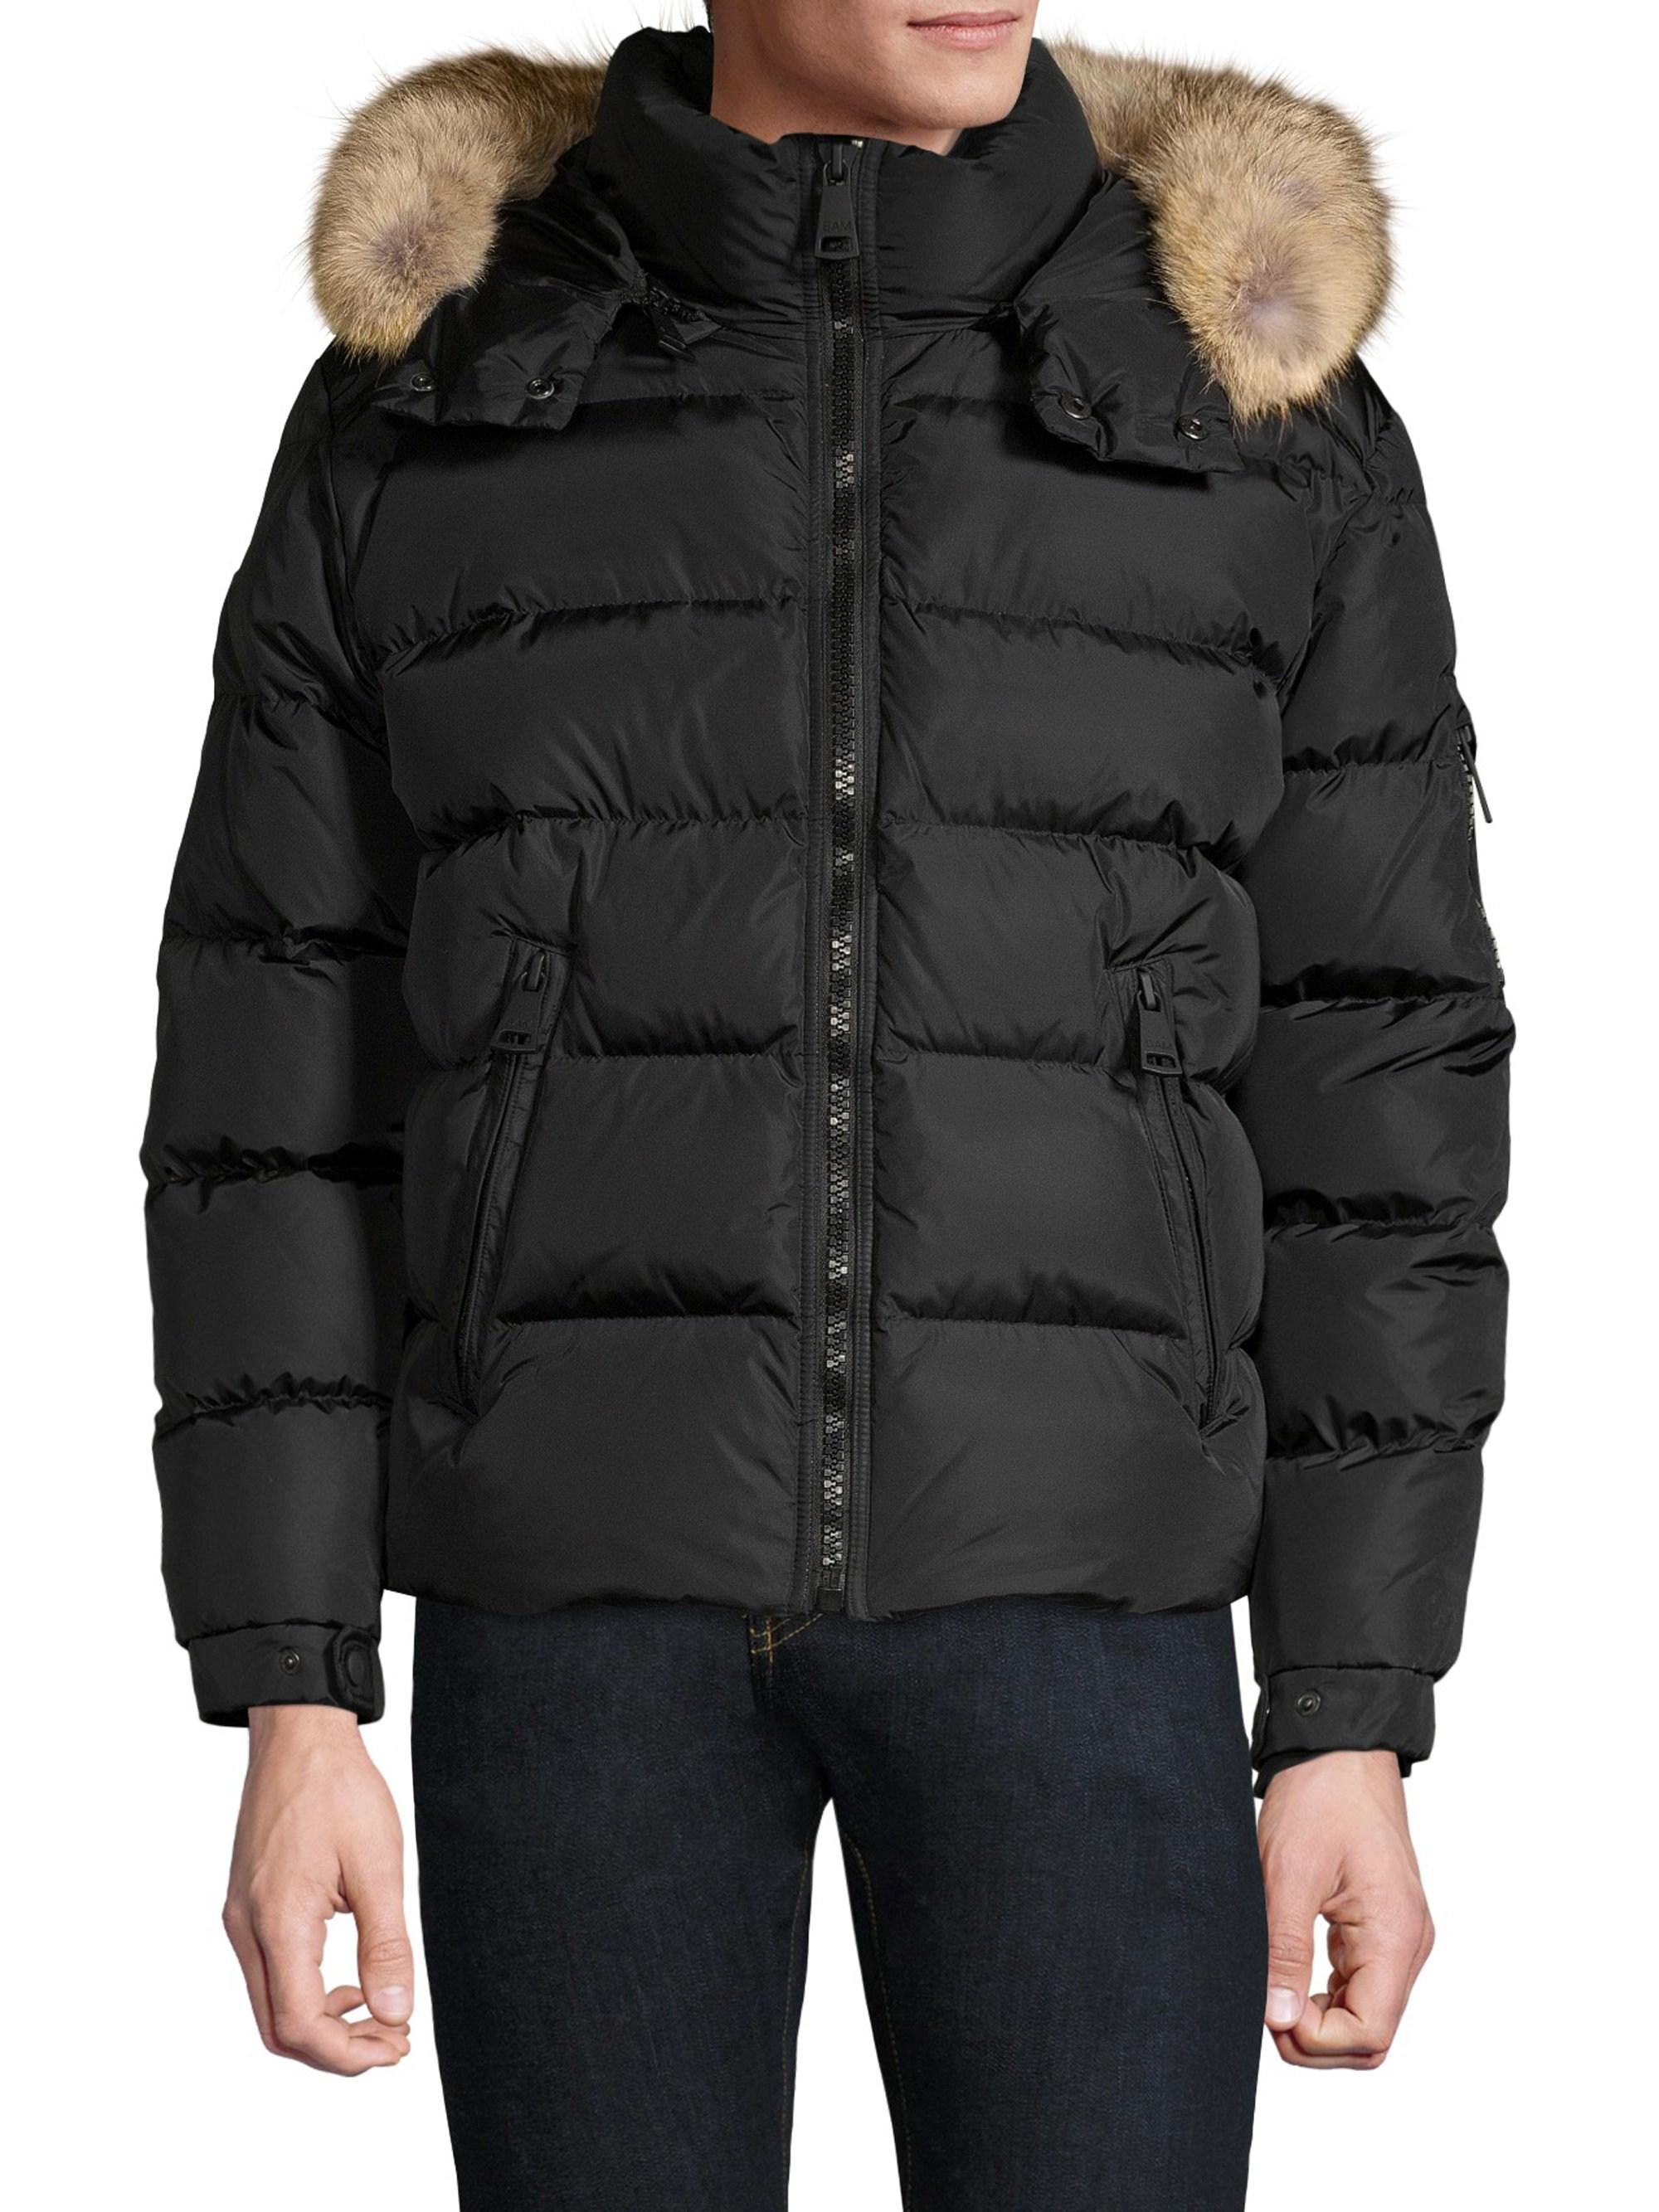 Coyote Fur Coat for Men Mens Winter Jacket Bomber Hooded 